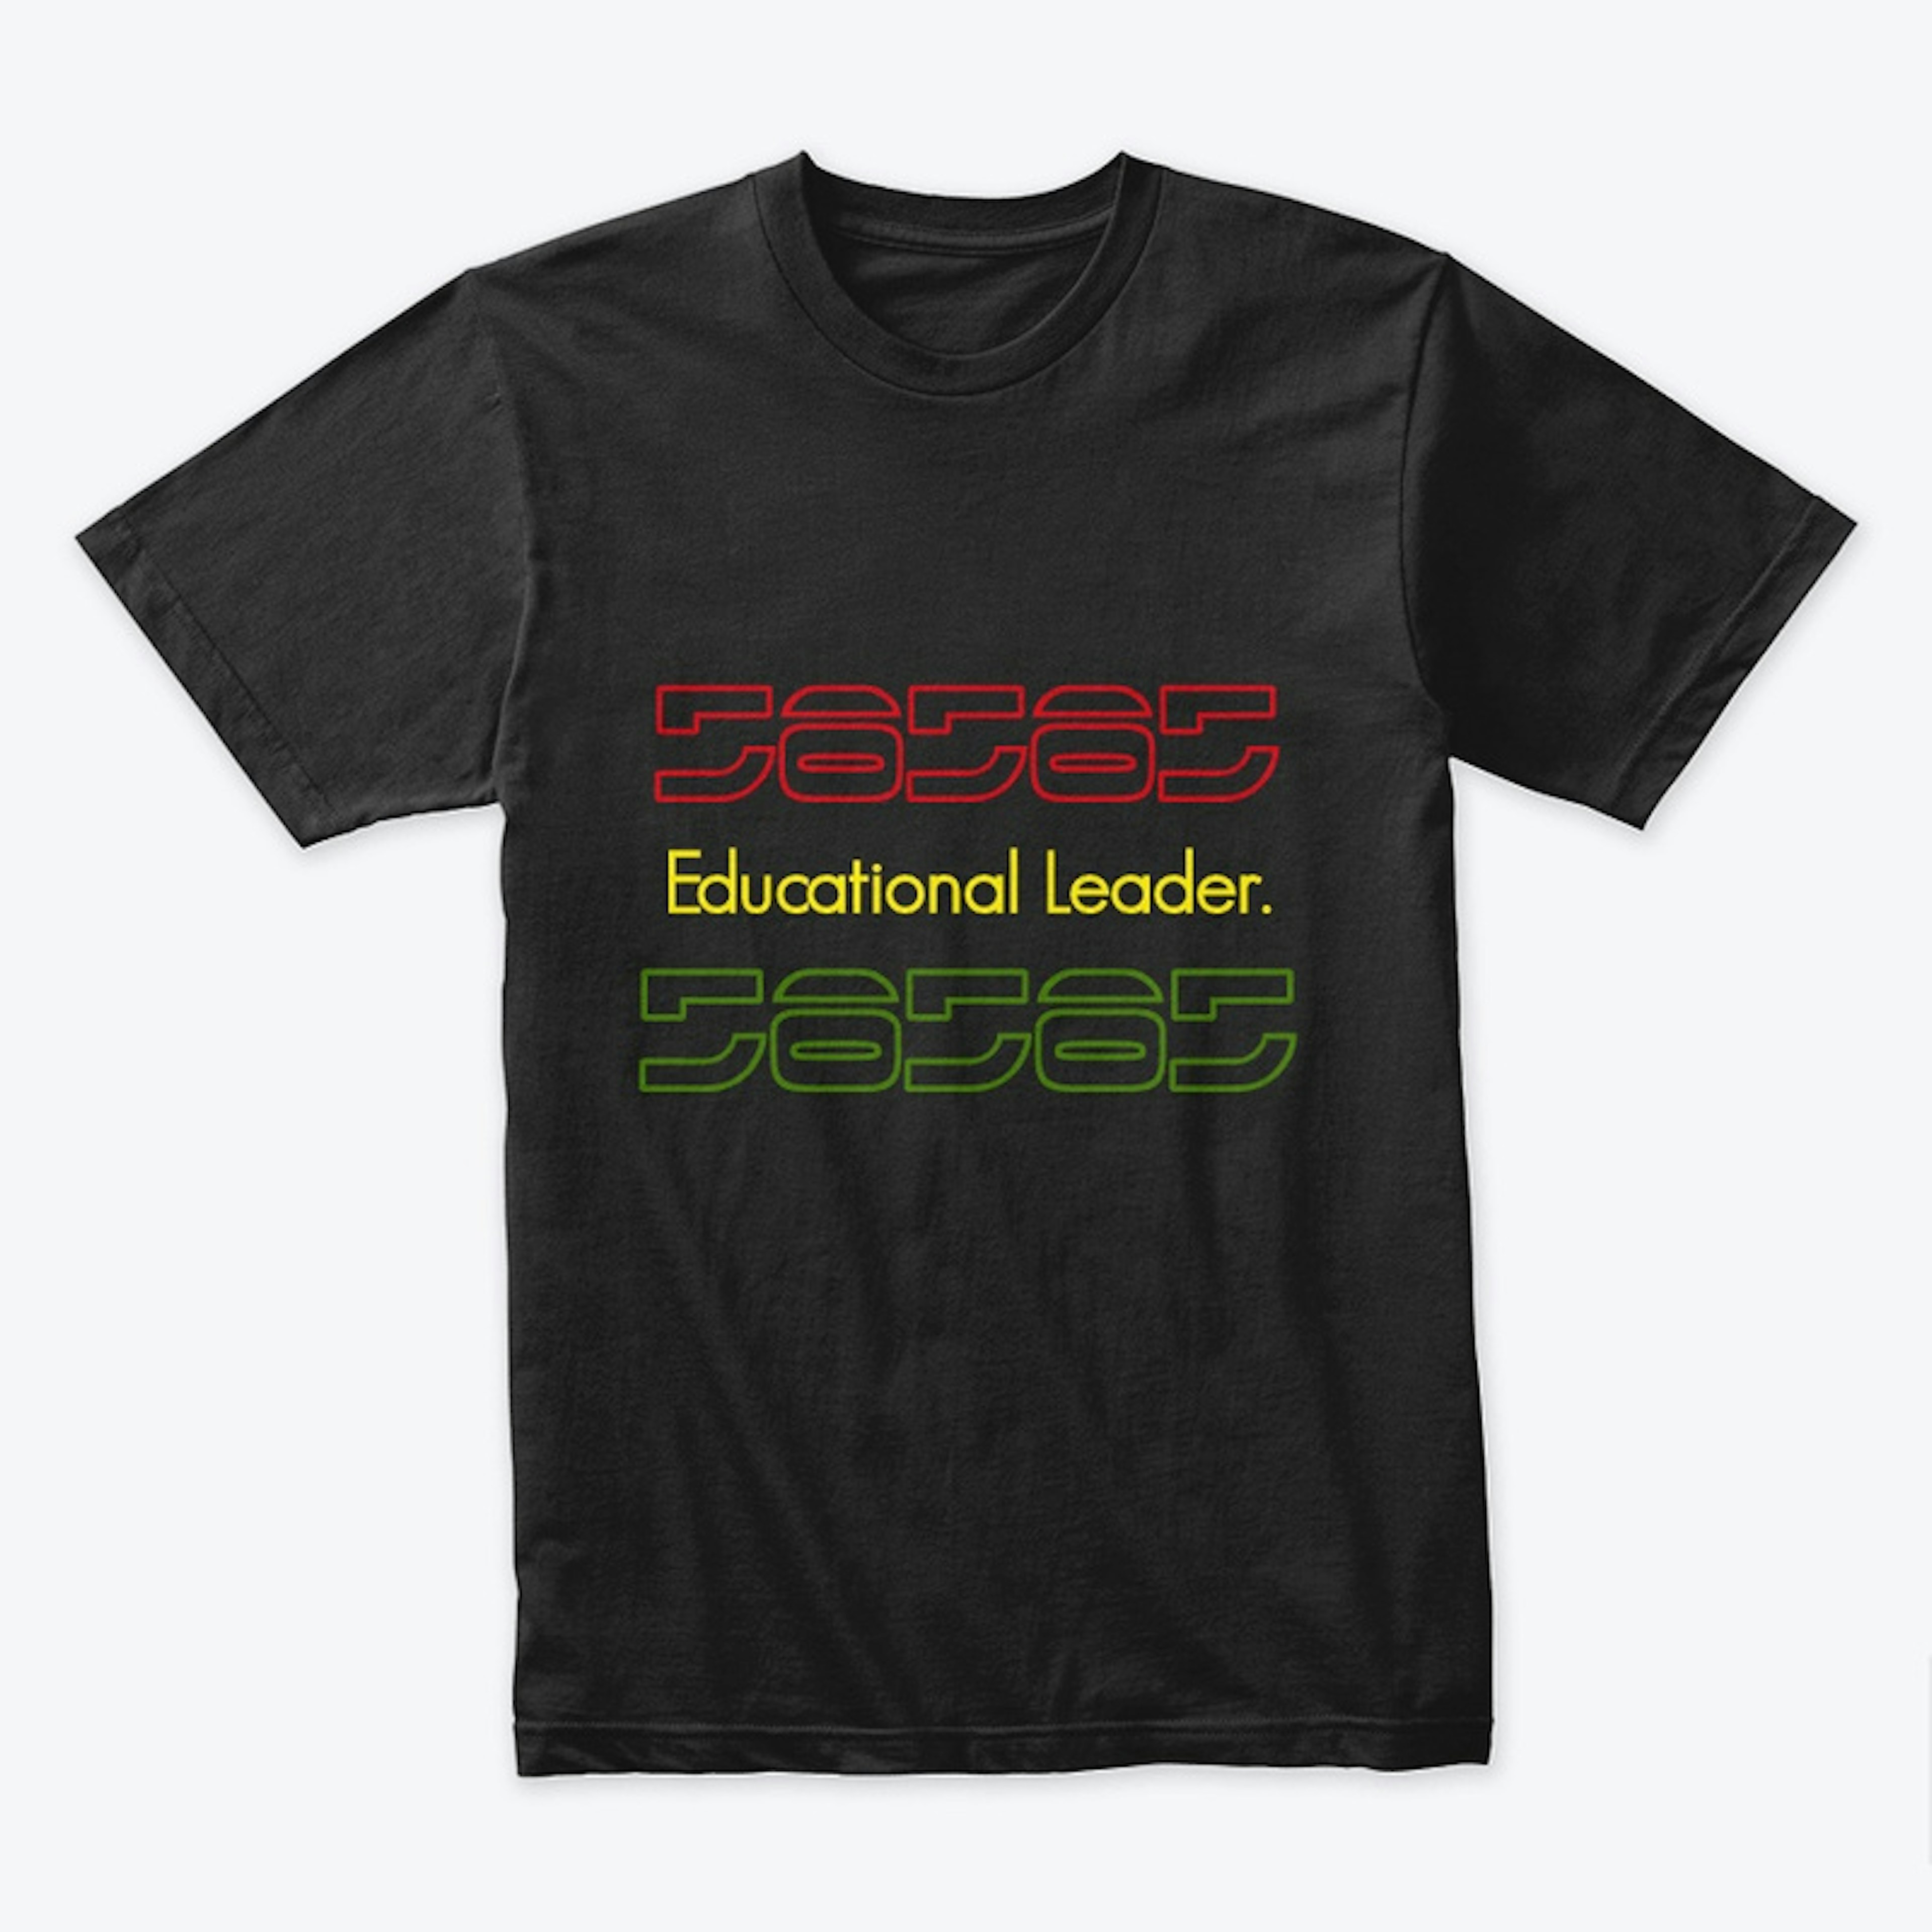 Educational Leader.